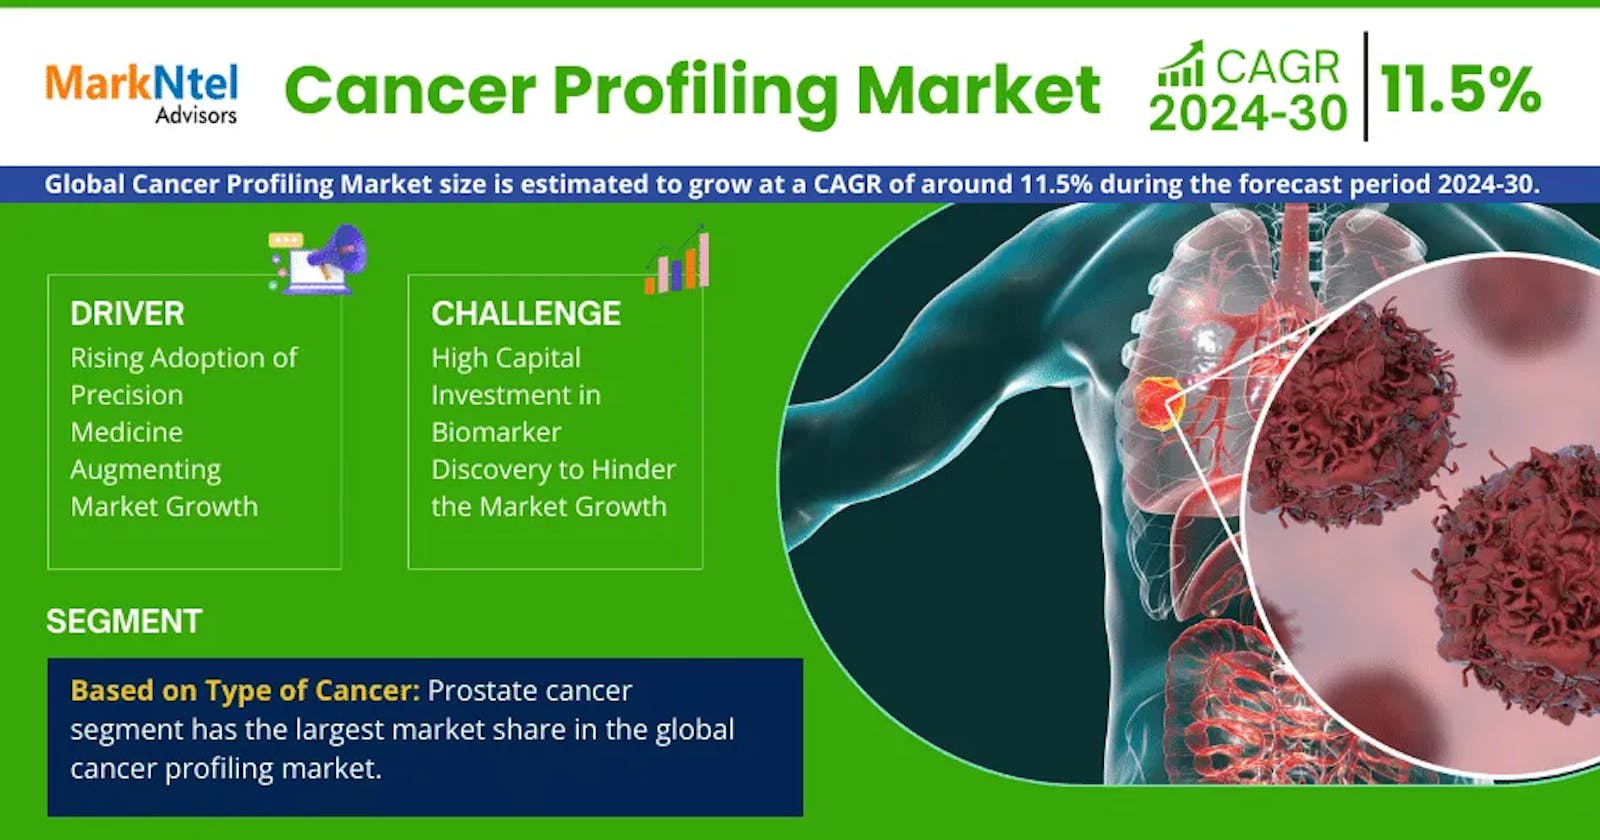 Cancer Profiling Market Anticipates Robust 11.5% CAGR for 2024-30